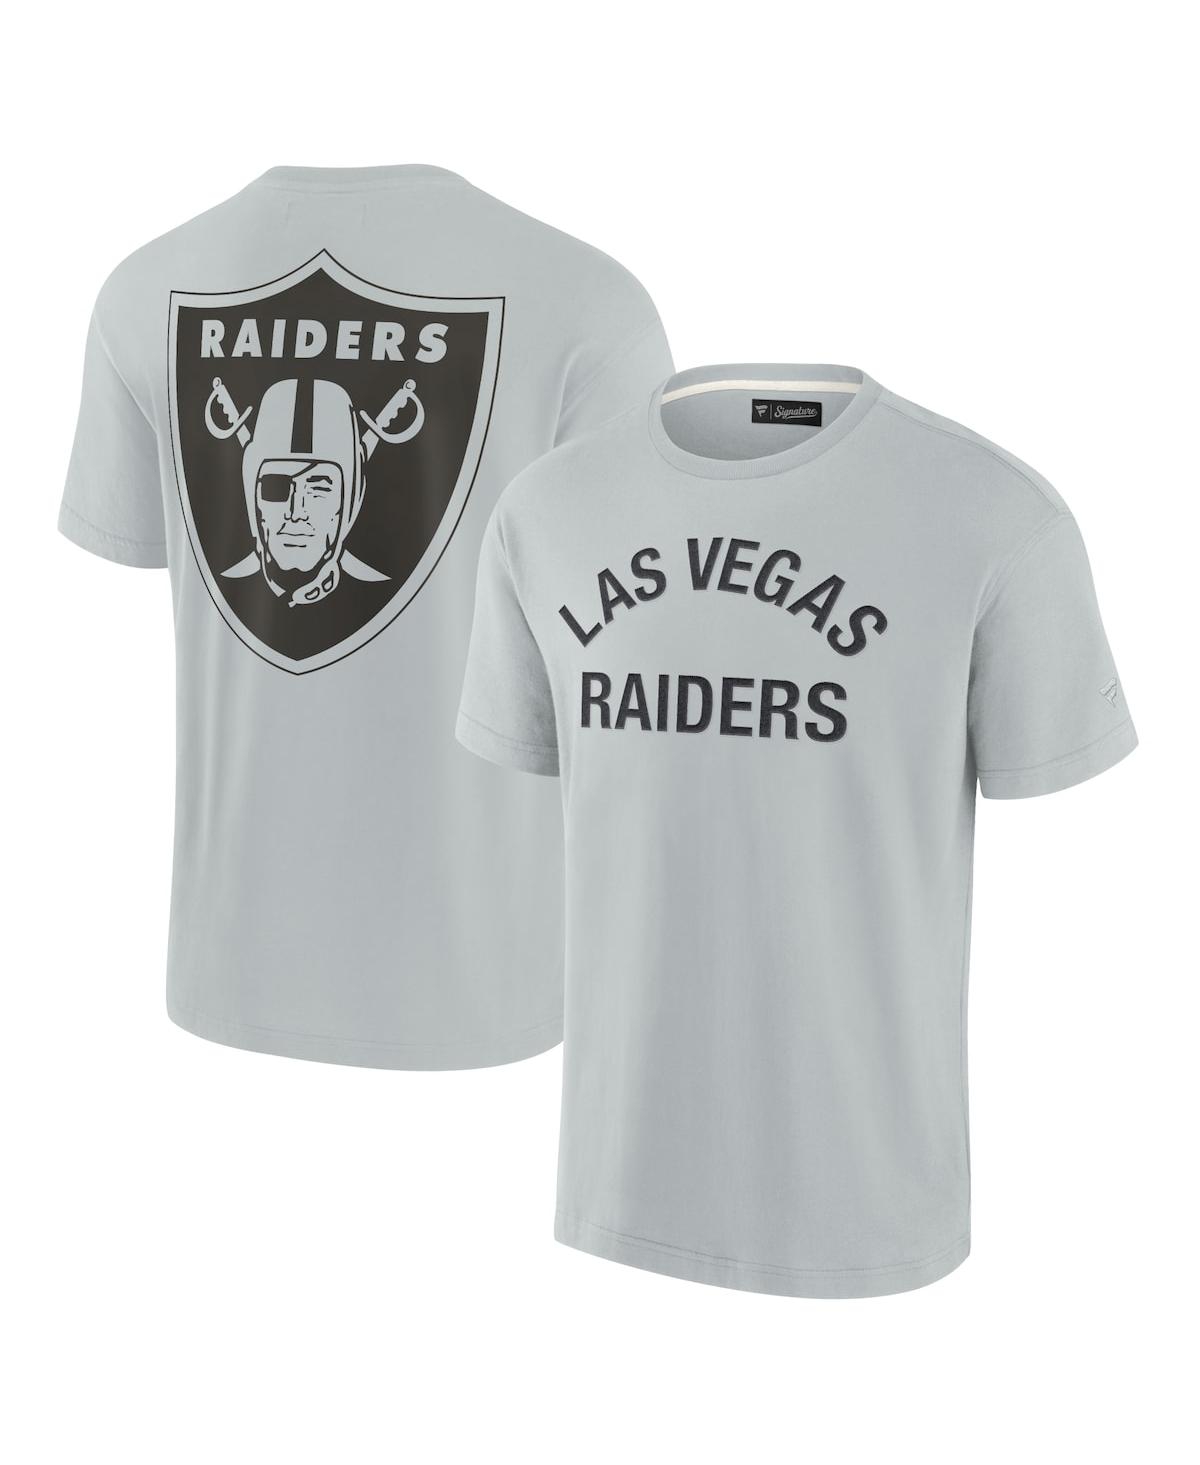 Men's and Women's Fanatics Signature Gray Las Vegas Raiders Super Soft Short Sleeve T-shirt - Gray